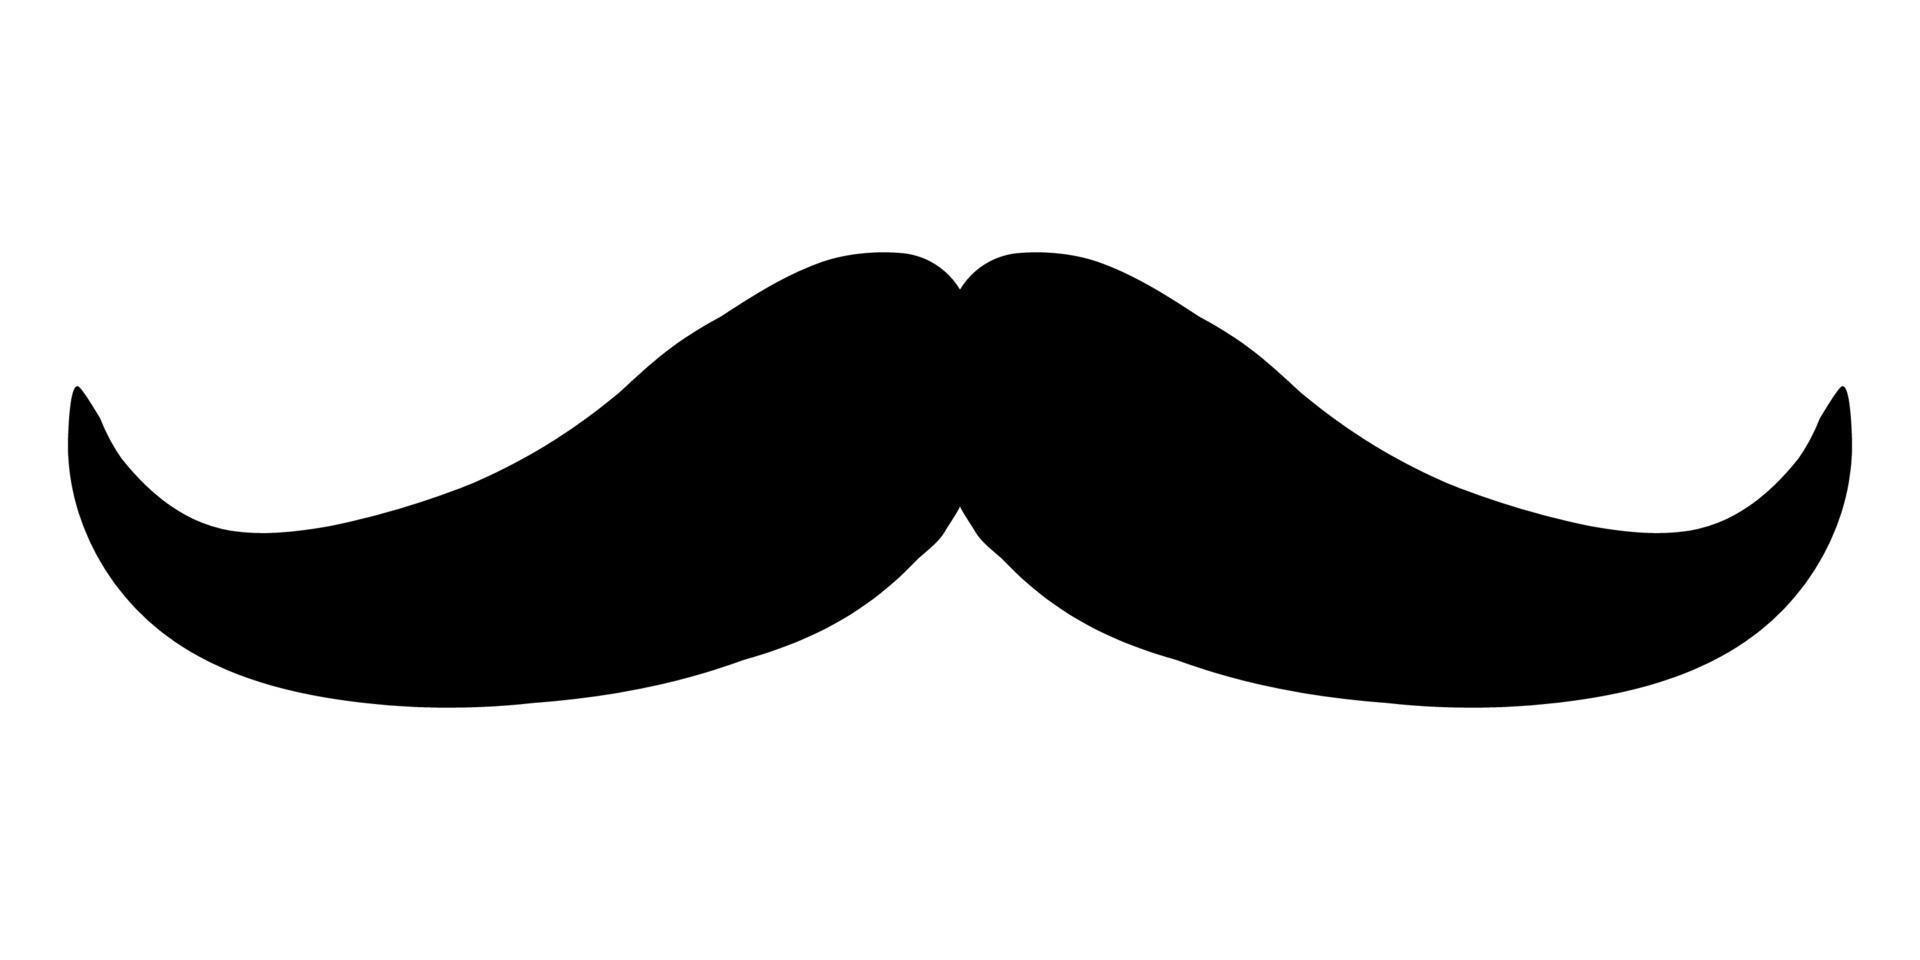 Black mustache swirls icon. Curly fashionable male mustache vector